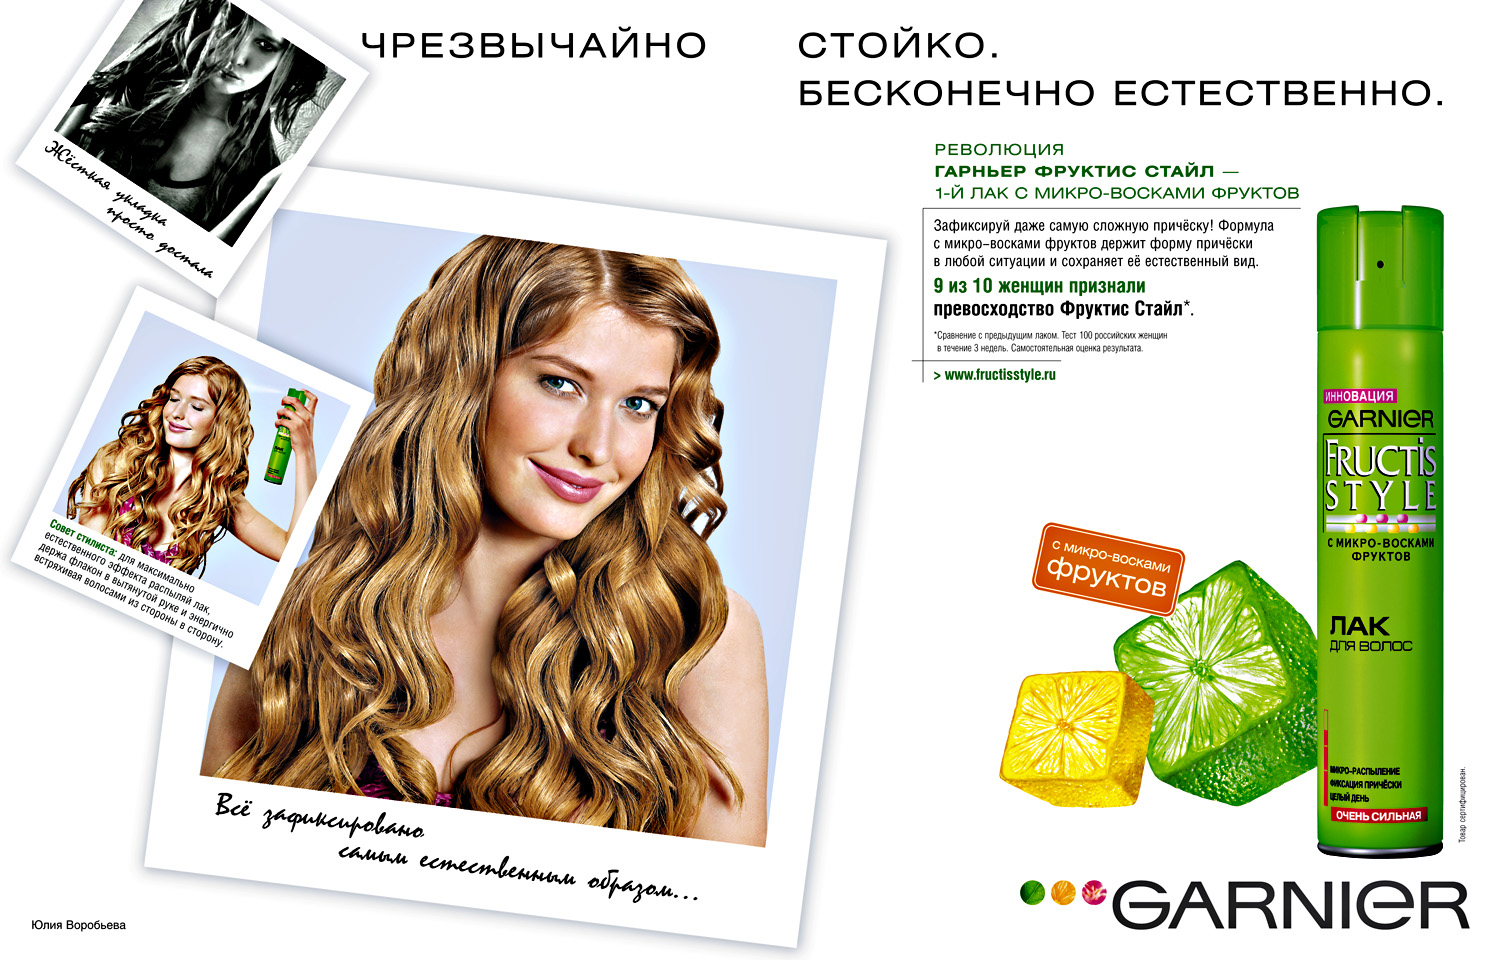 Garnier реклама. Реклама гарньер. Реклама краски для волос. Реклама шампуня гарньер. Реклама краски для волос на плакате.